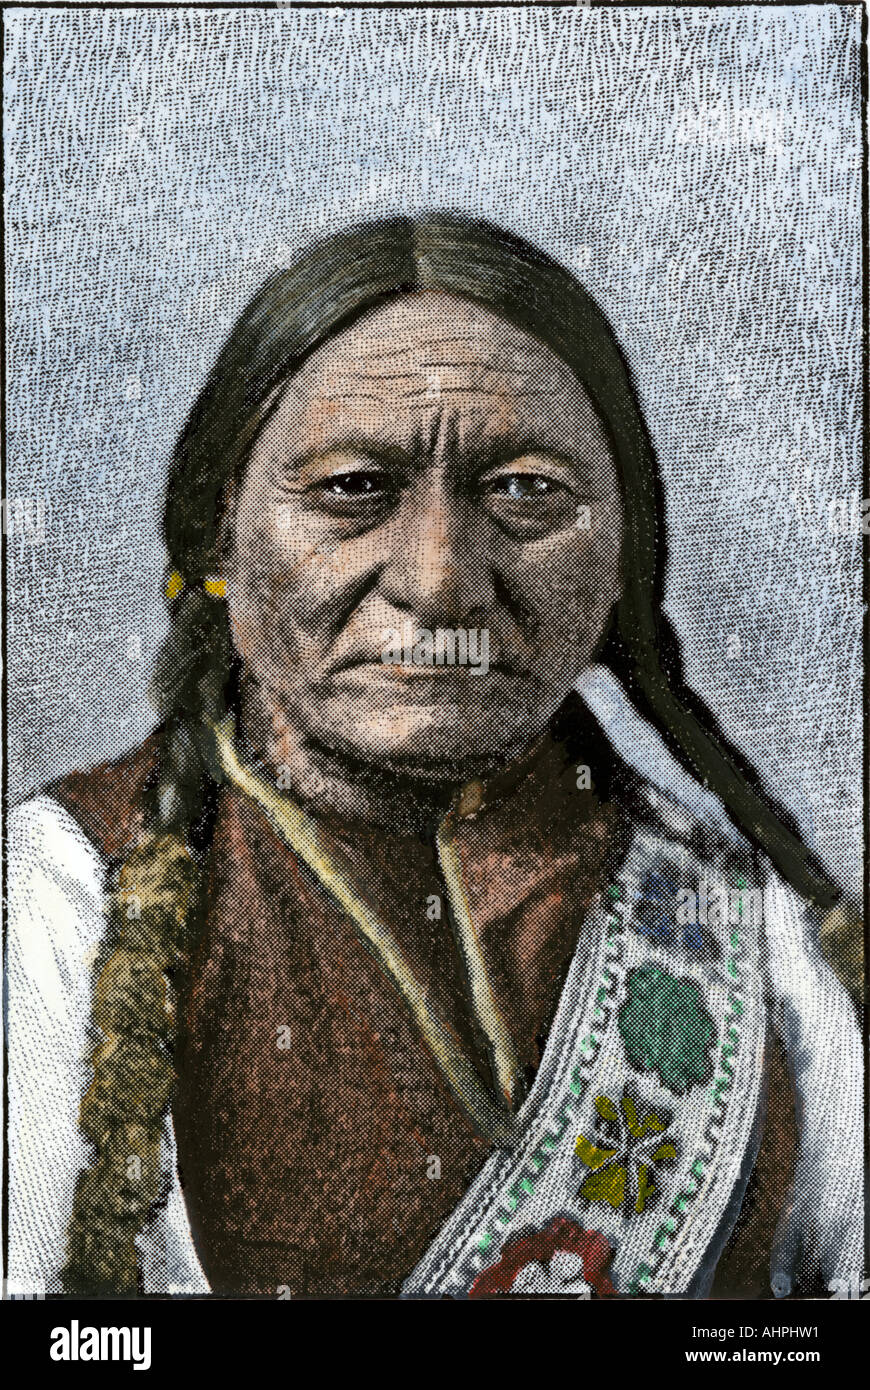 Sitting Bull der Oglala Sioux. Hand - farbige Raster eines Fotos Stockfoto